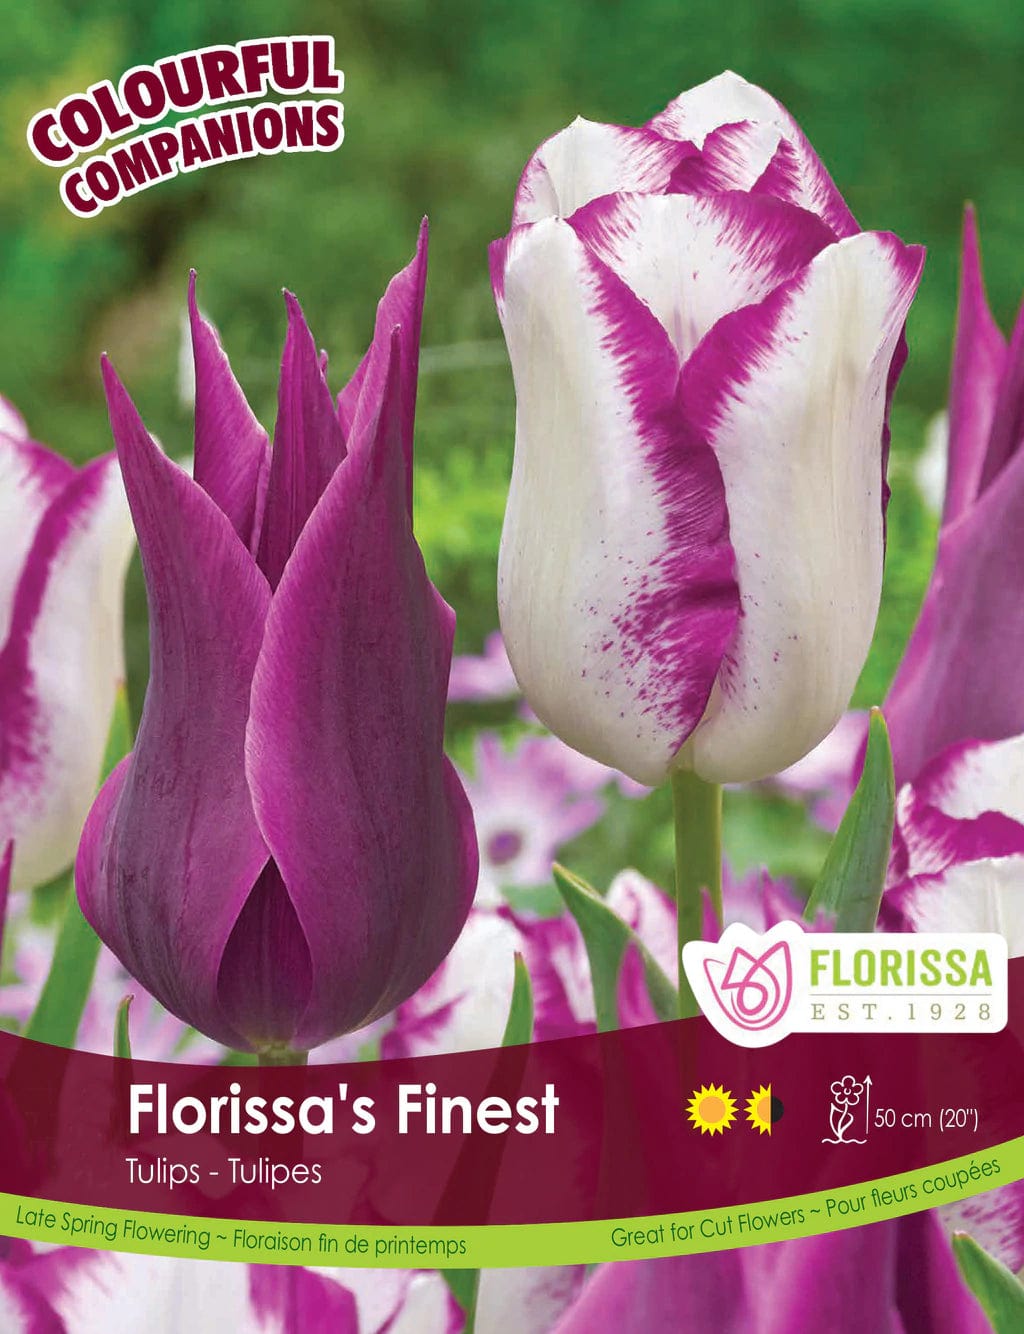 Tulips - Florissa's Finest, Colourful Companions, 14 Pack